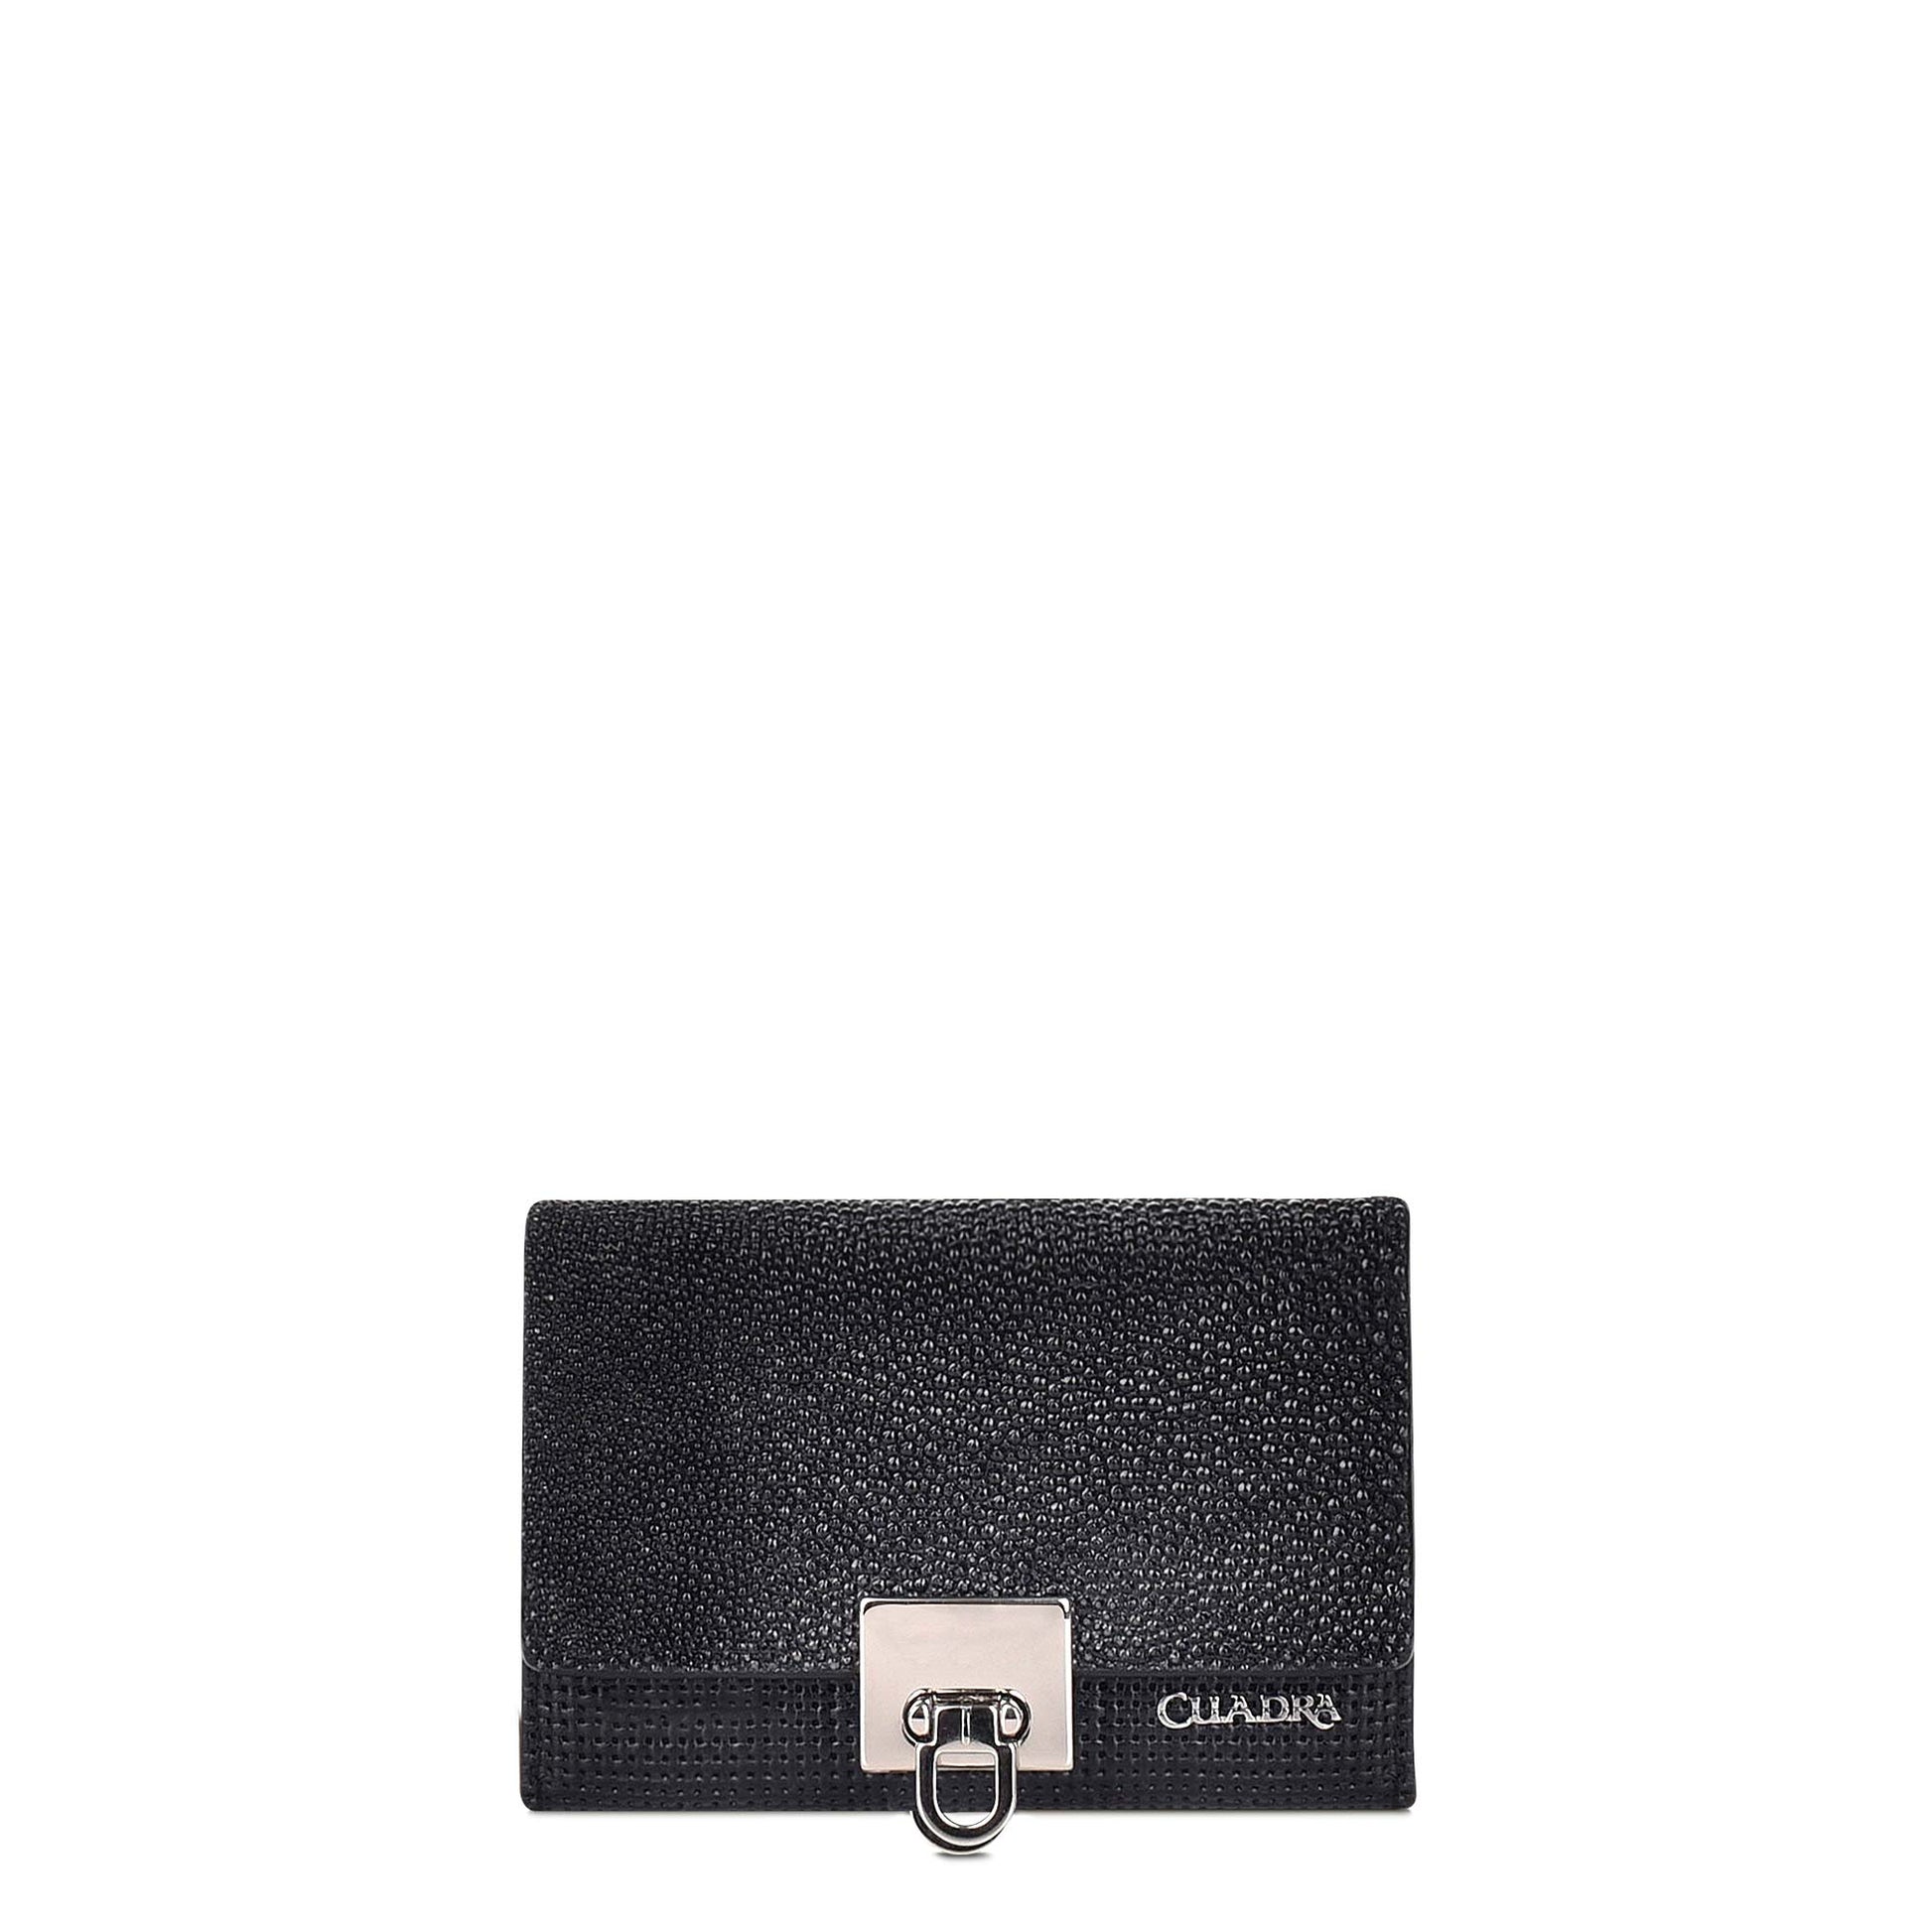 Bottega Veneta® Women's Small Bi-Fold Zip Wallet in Black. Shop online now.